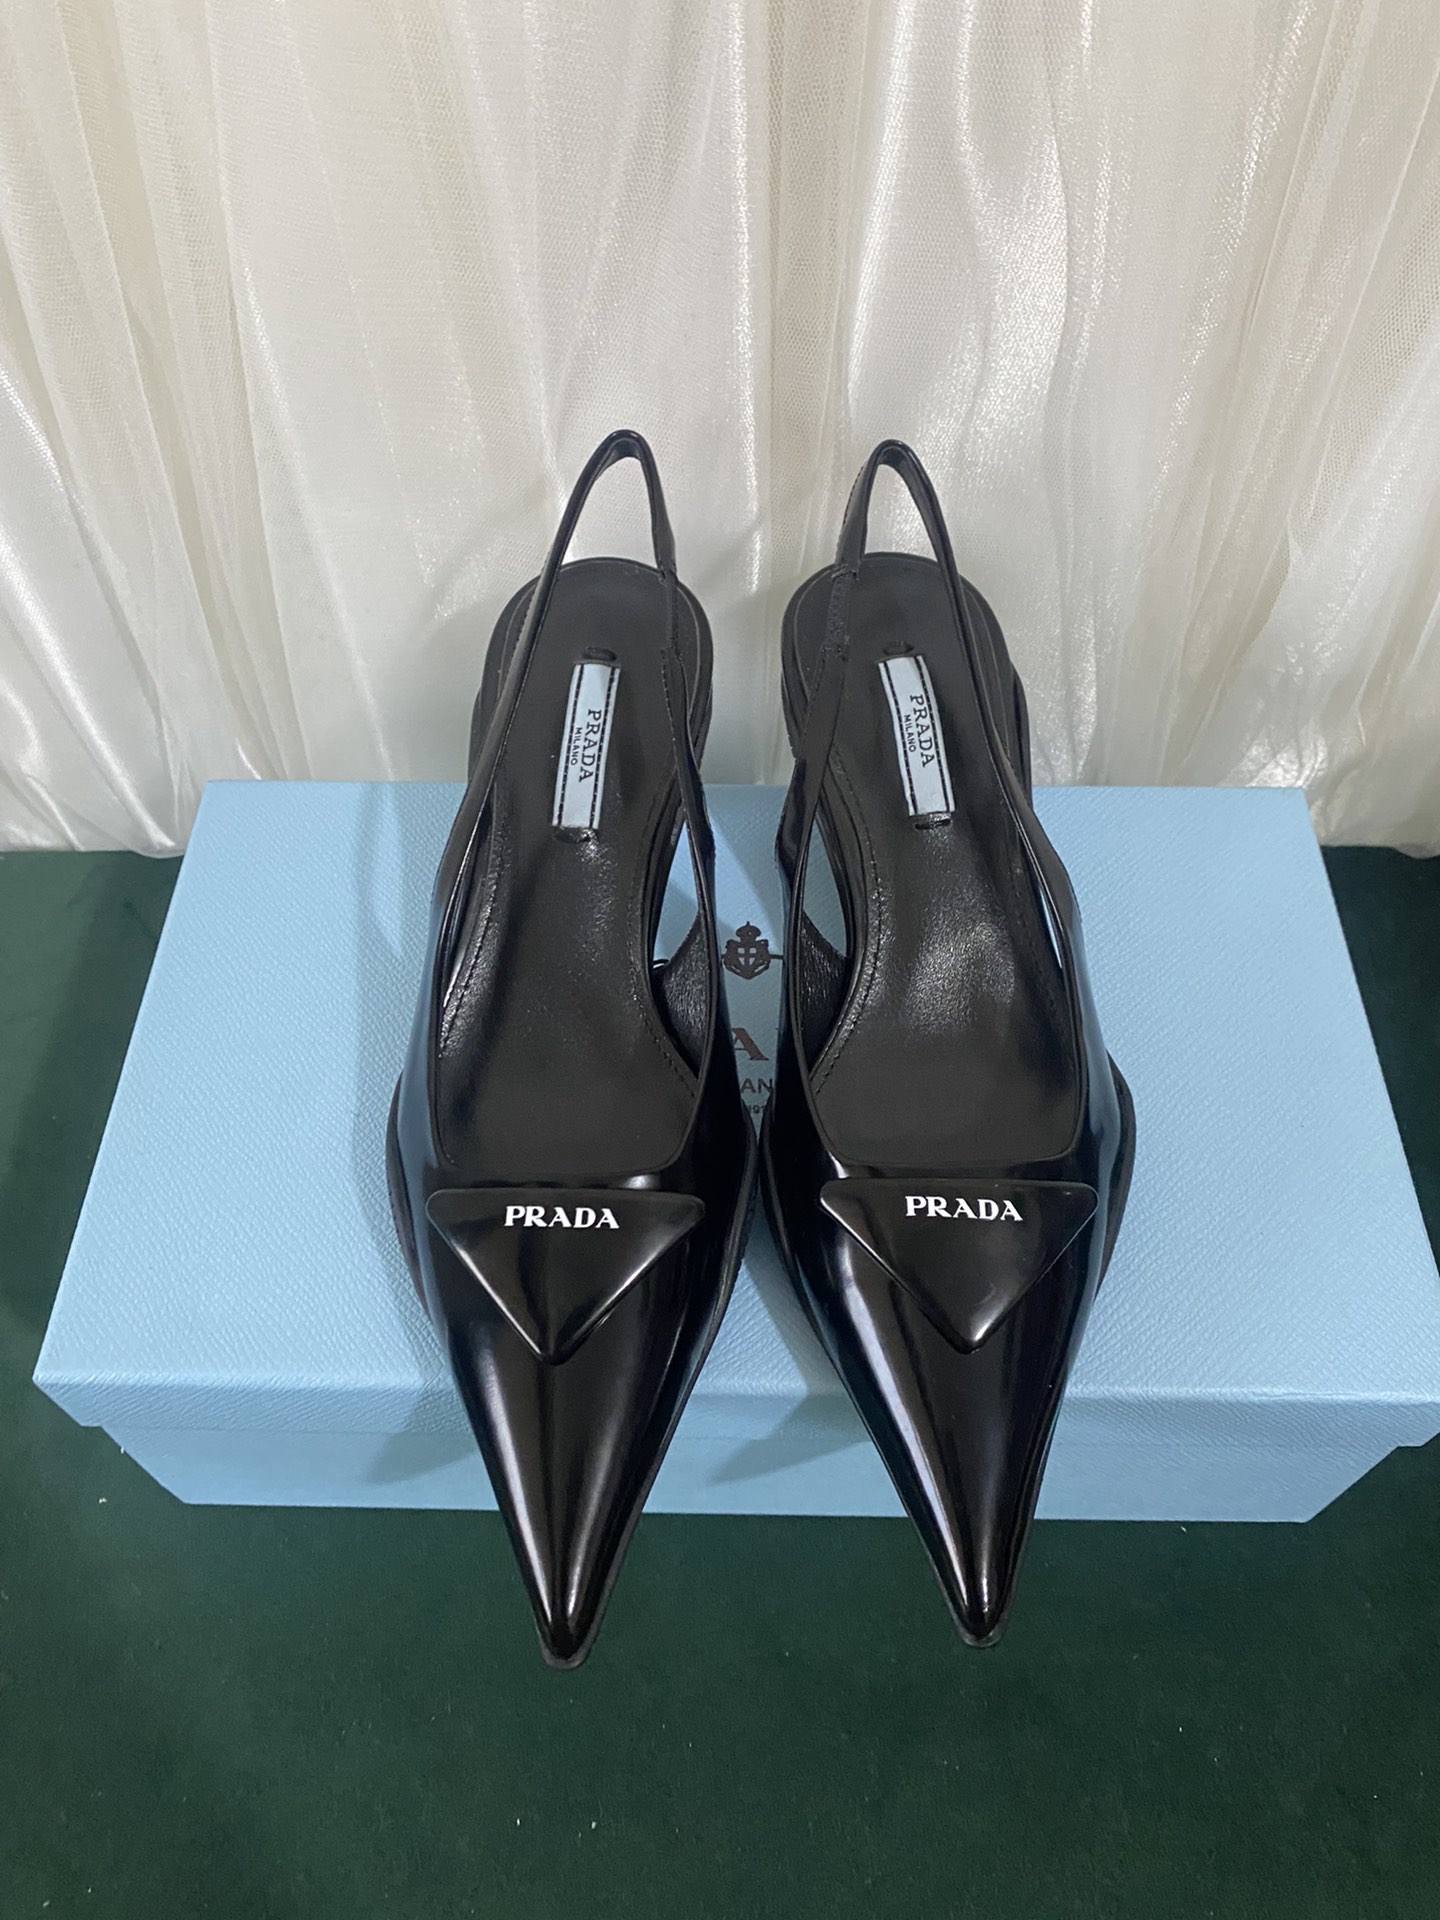 Supplier in China
 Prada Shoes Women Men